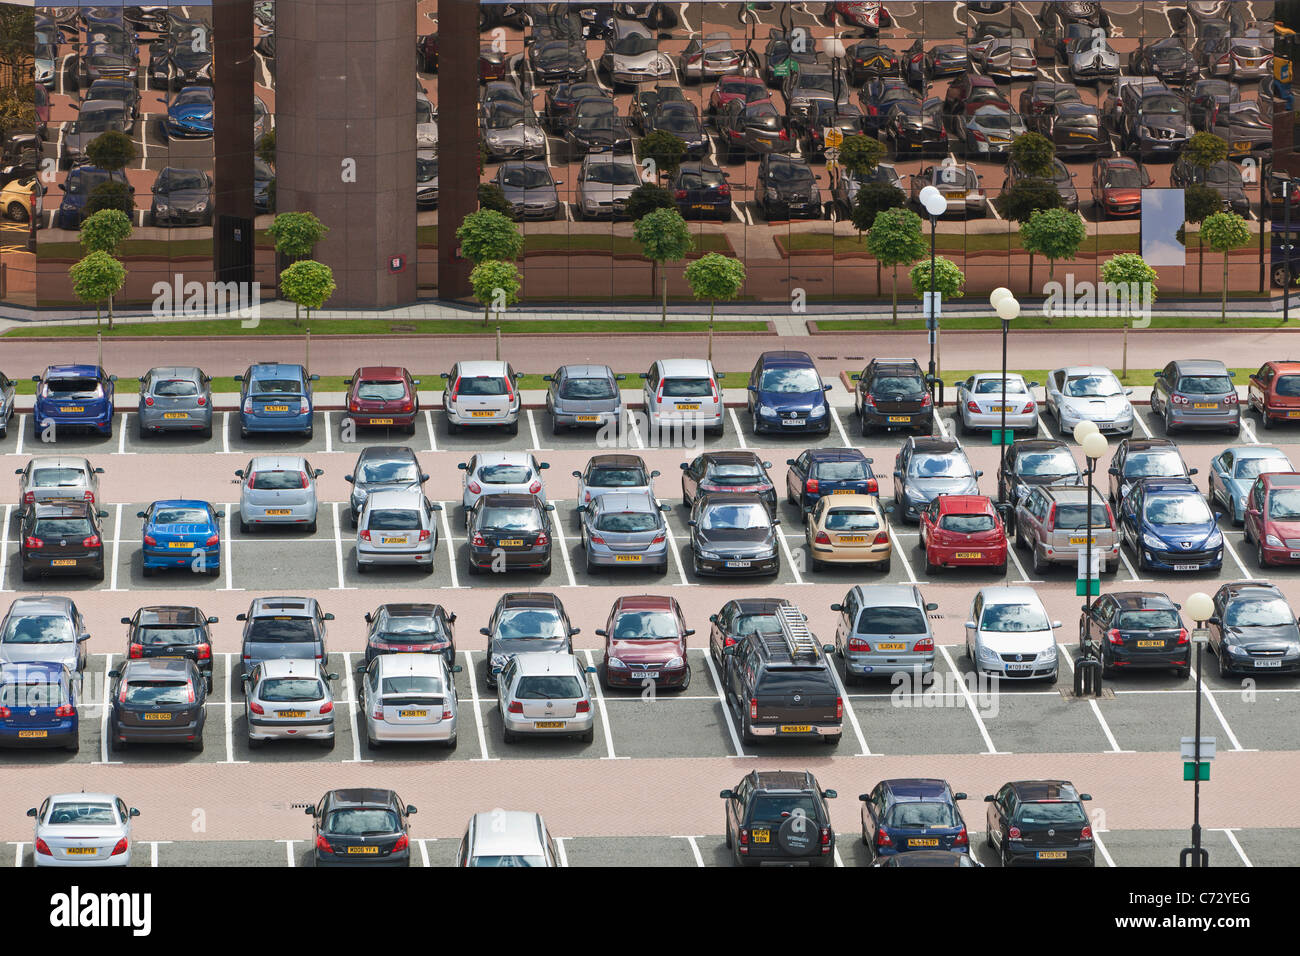 view of a public car park, England Stock Photo